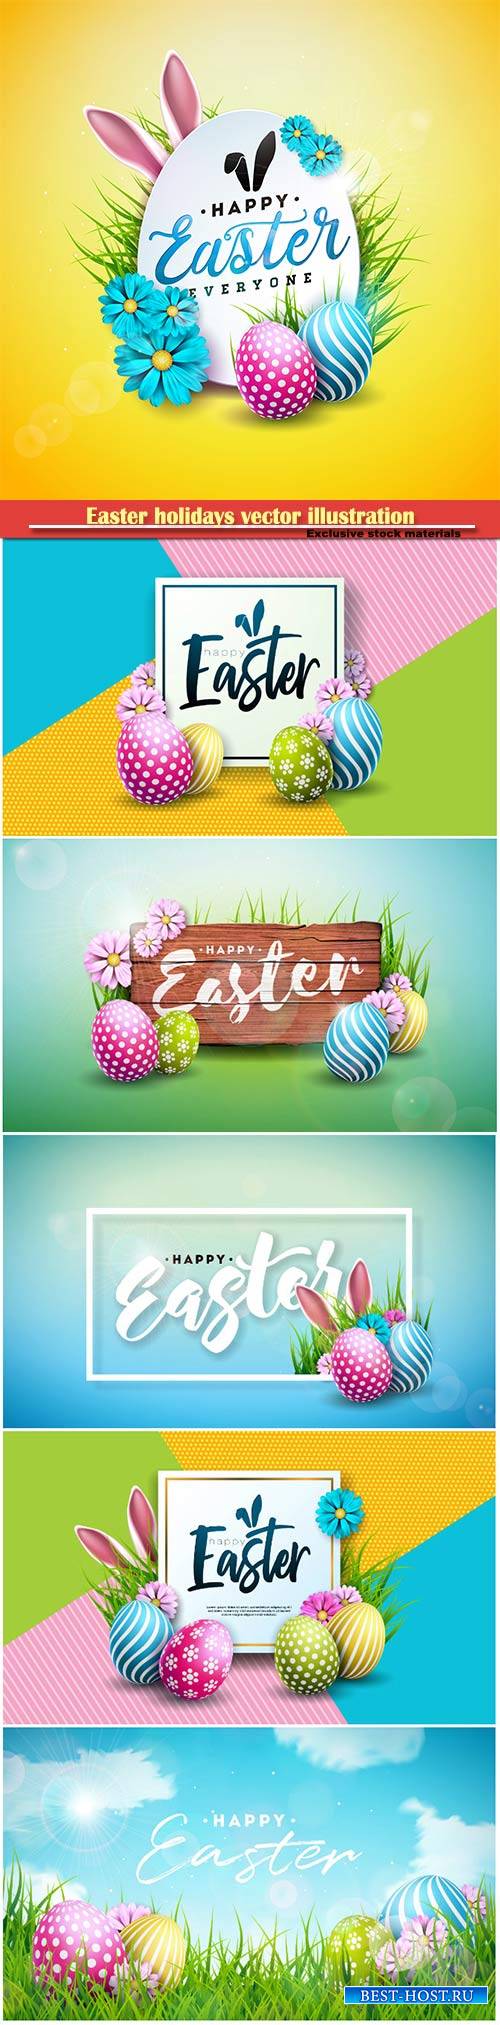 Easter holidays vector illustration # 11